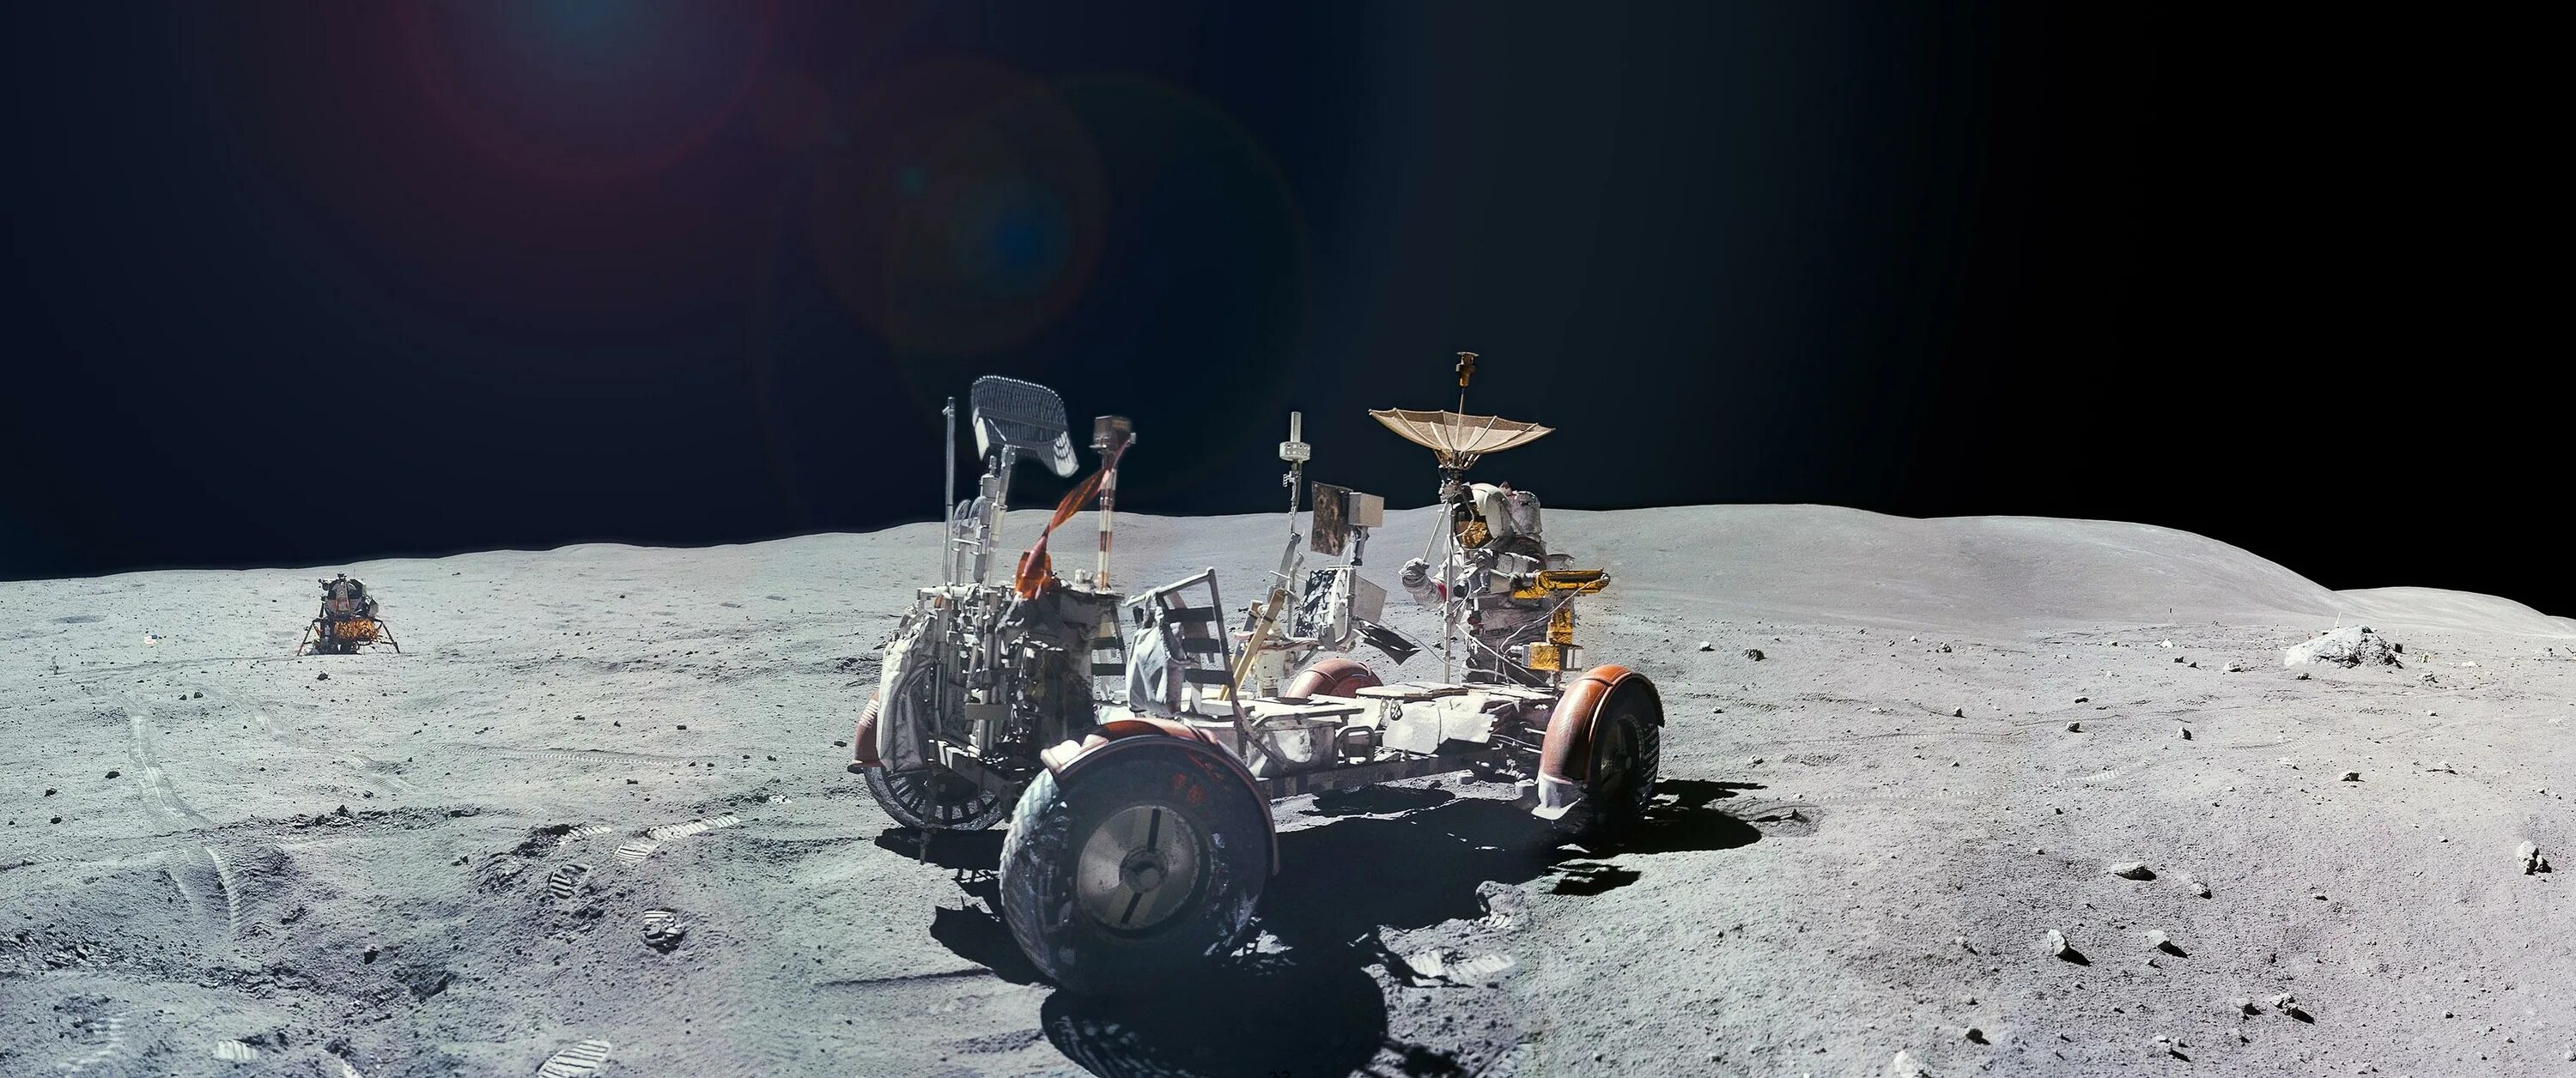 Первая космическая гонка. Аполлон 16 Луноход. Аполлон 16 фото на Луне. Аполлон-16 на старте. Лунный модуль Аполлон 16.